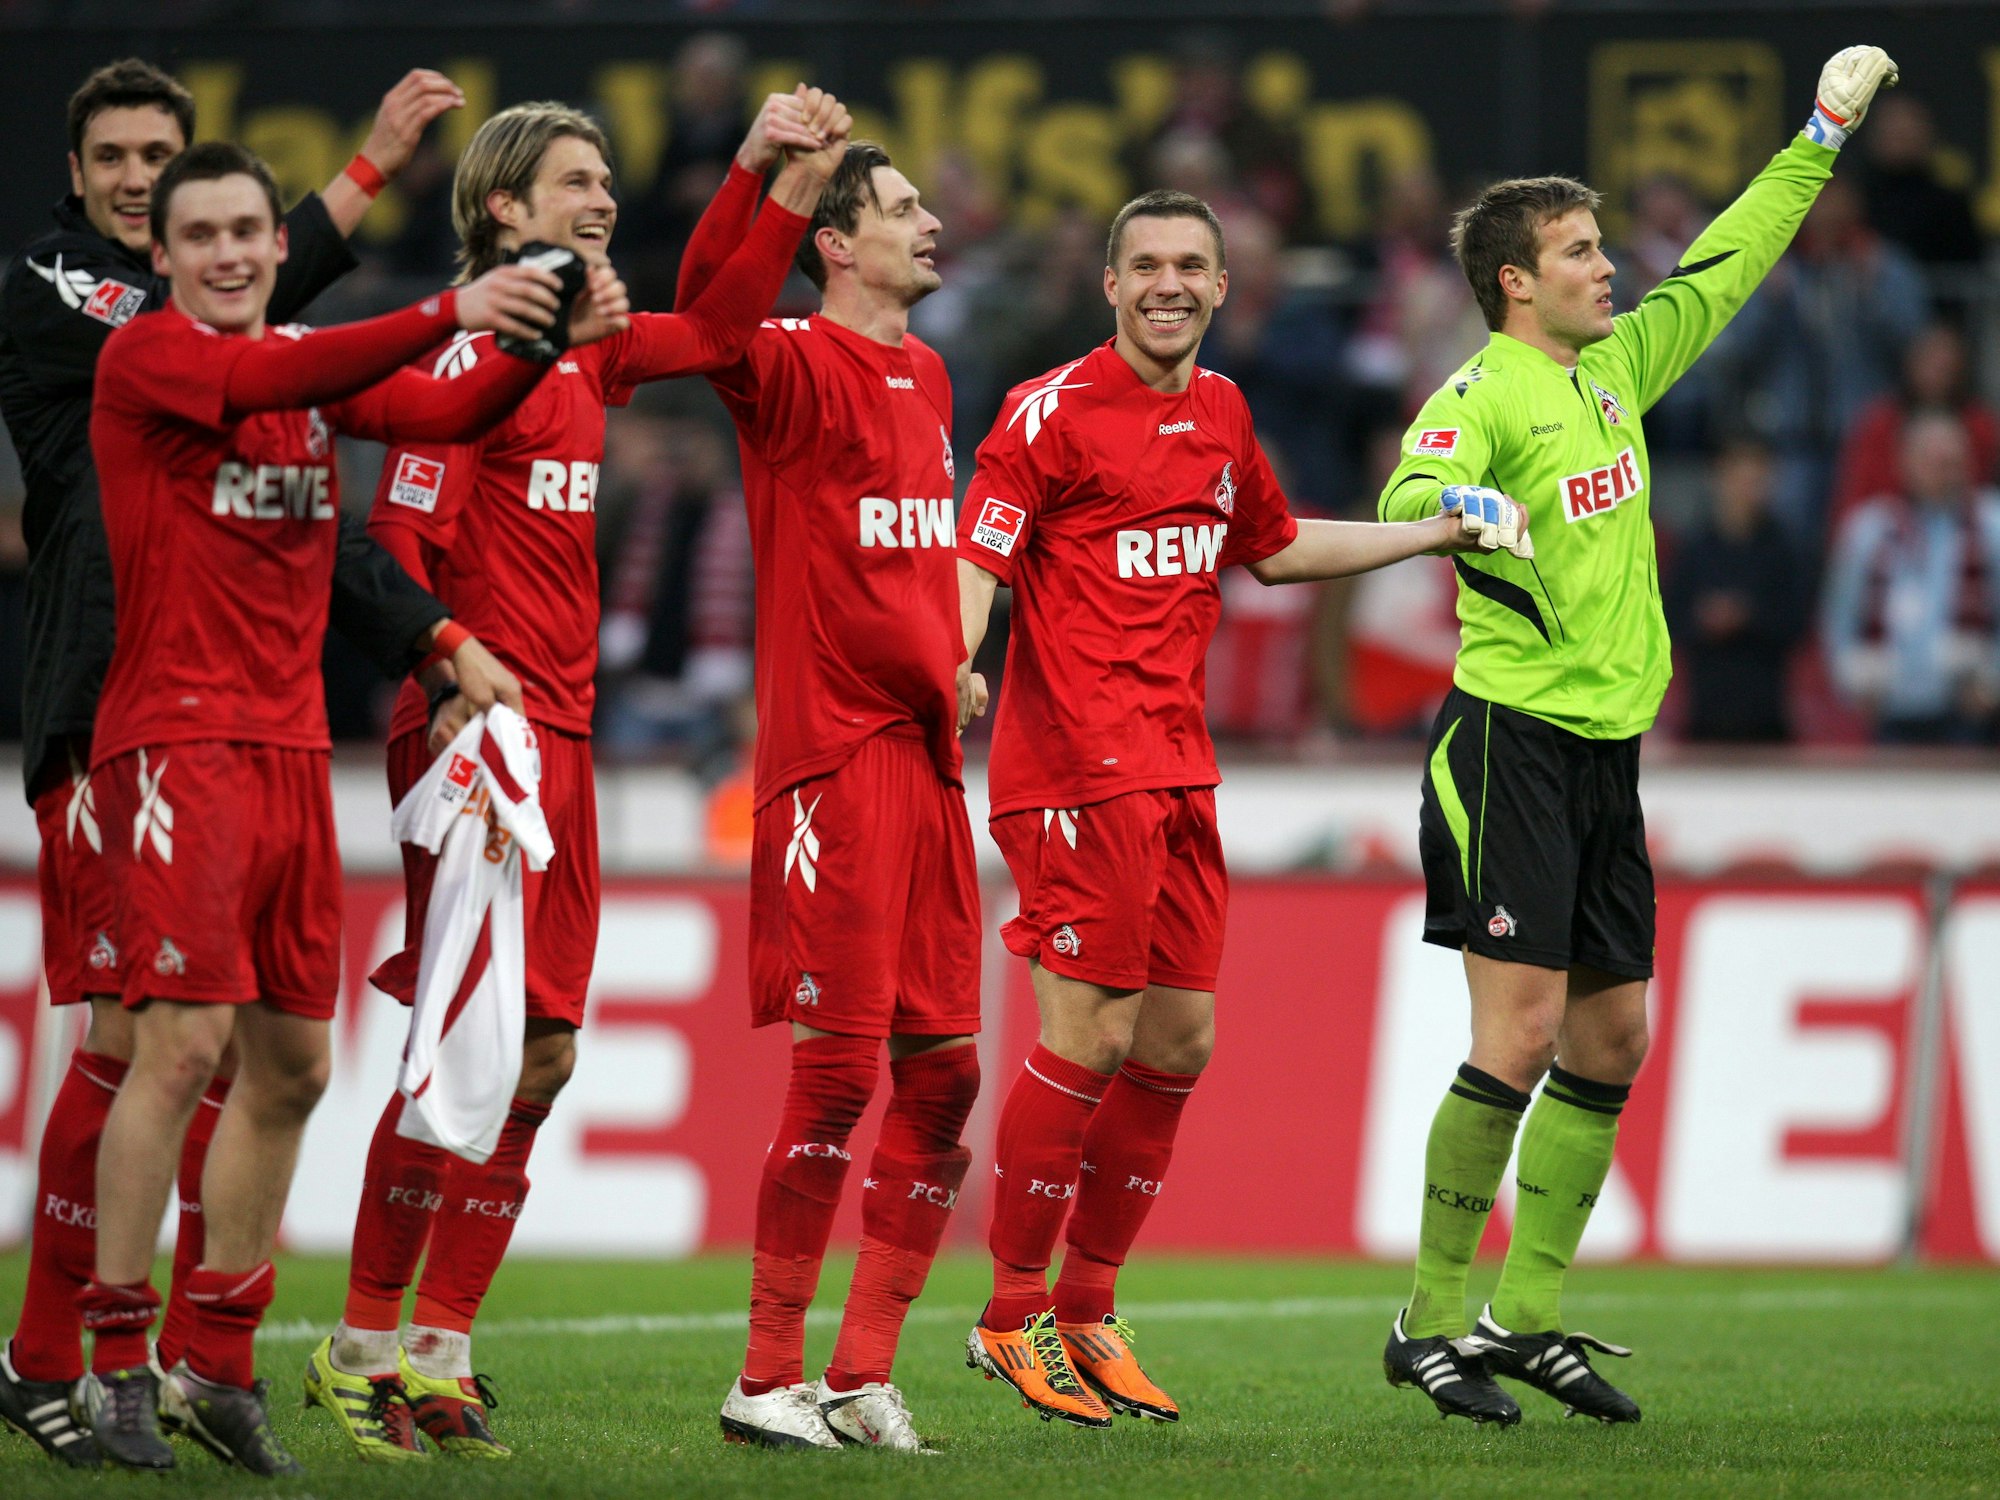 Kölns Christian Clemens (l-r), Martin Lanig, Milivoje Novakovic, Lukas Podolski und Michael Rensing feiern das 4:1 gegen den FSV Mainz 05 am 13. Februar 2011.